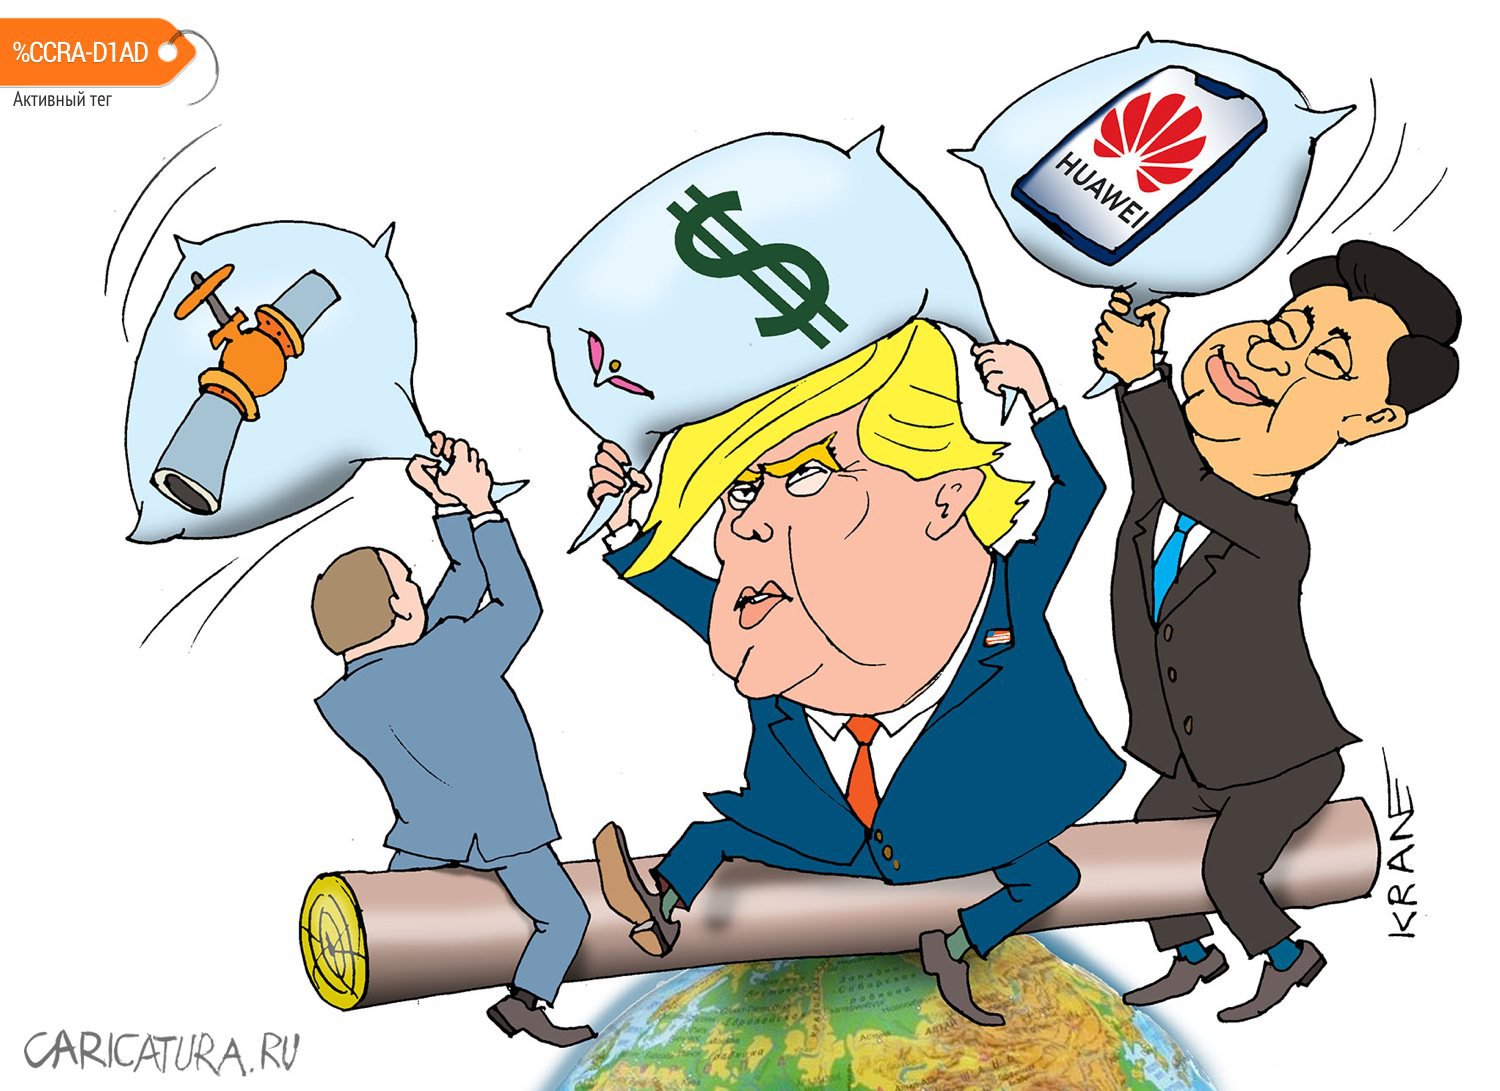 Карикатура "США навязывают протекционизм, Китай - за свободну", Евгений Кран